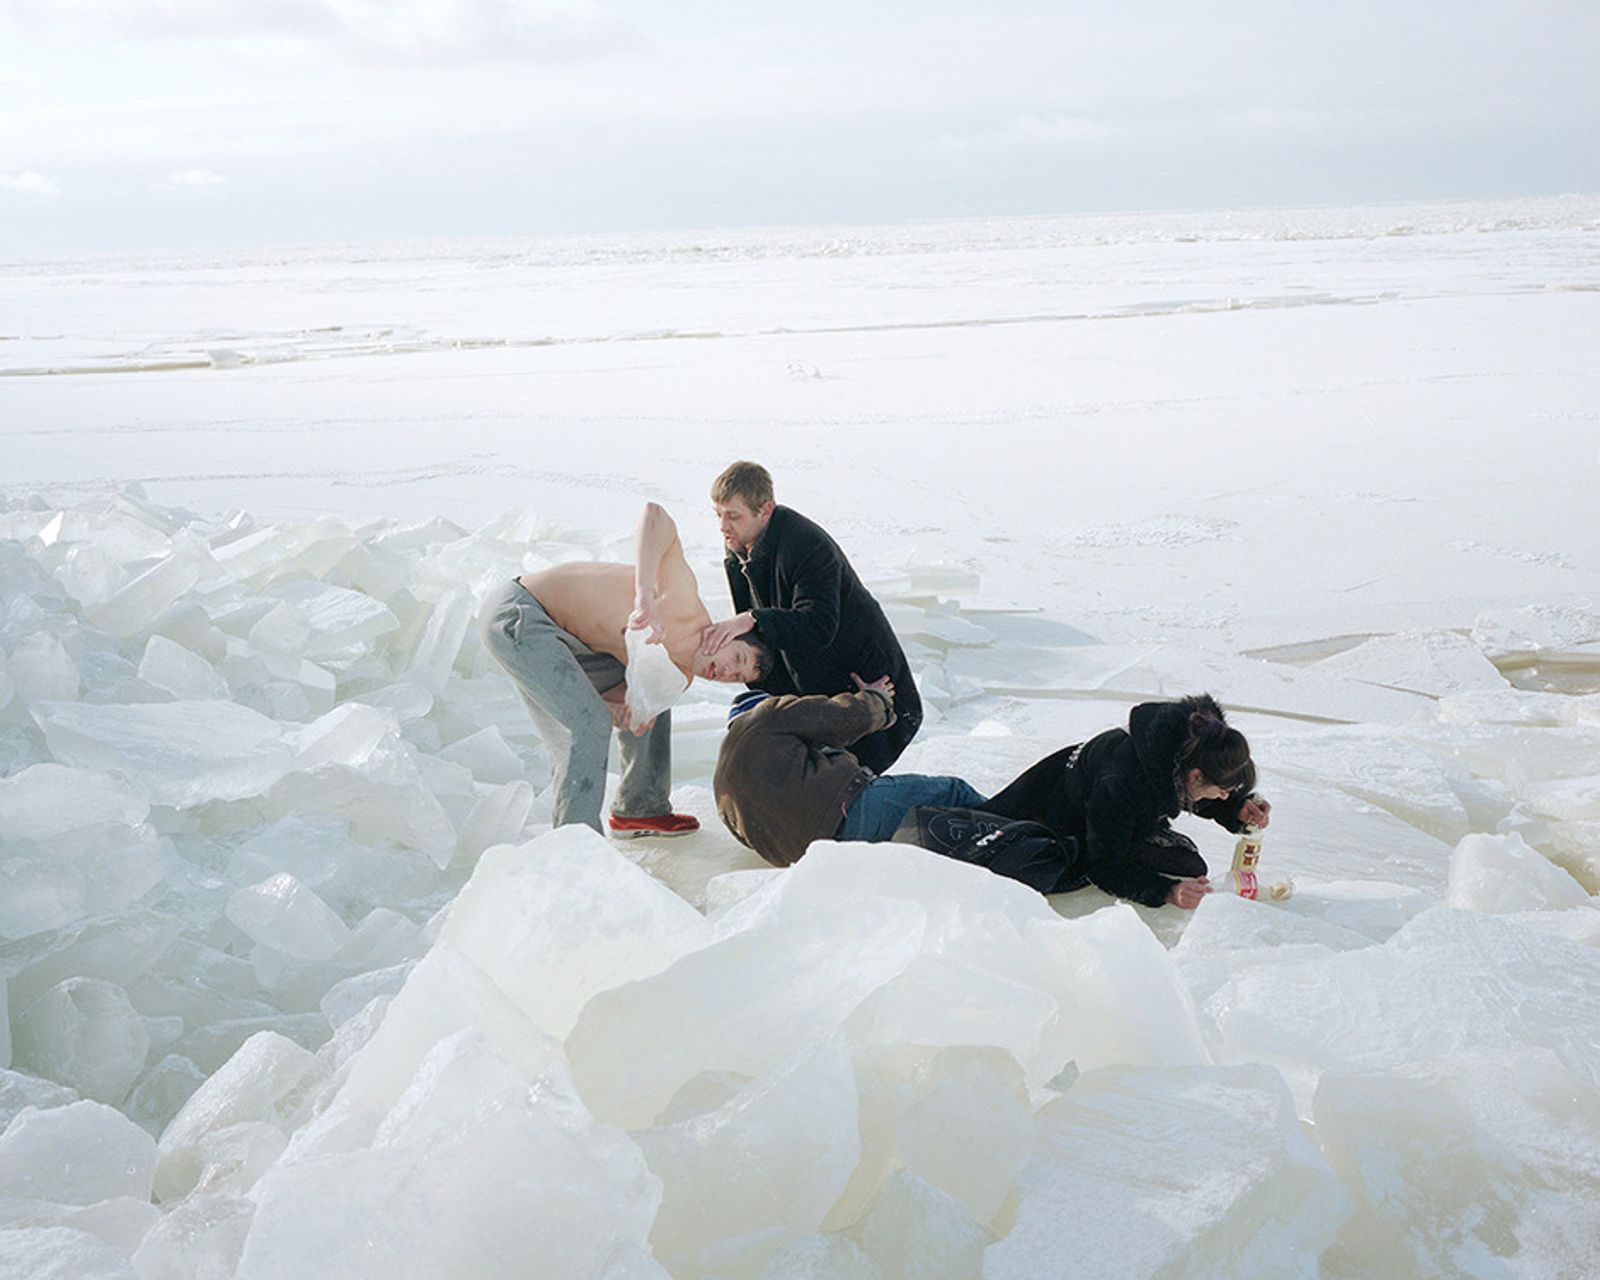 © Andrejs Strokins - Drunk guys on the frozen Gulf of Riga, 2013